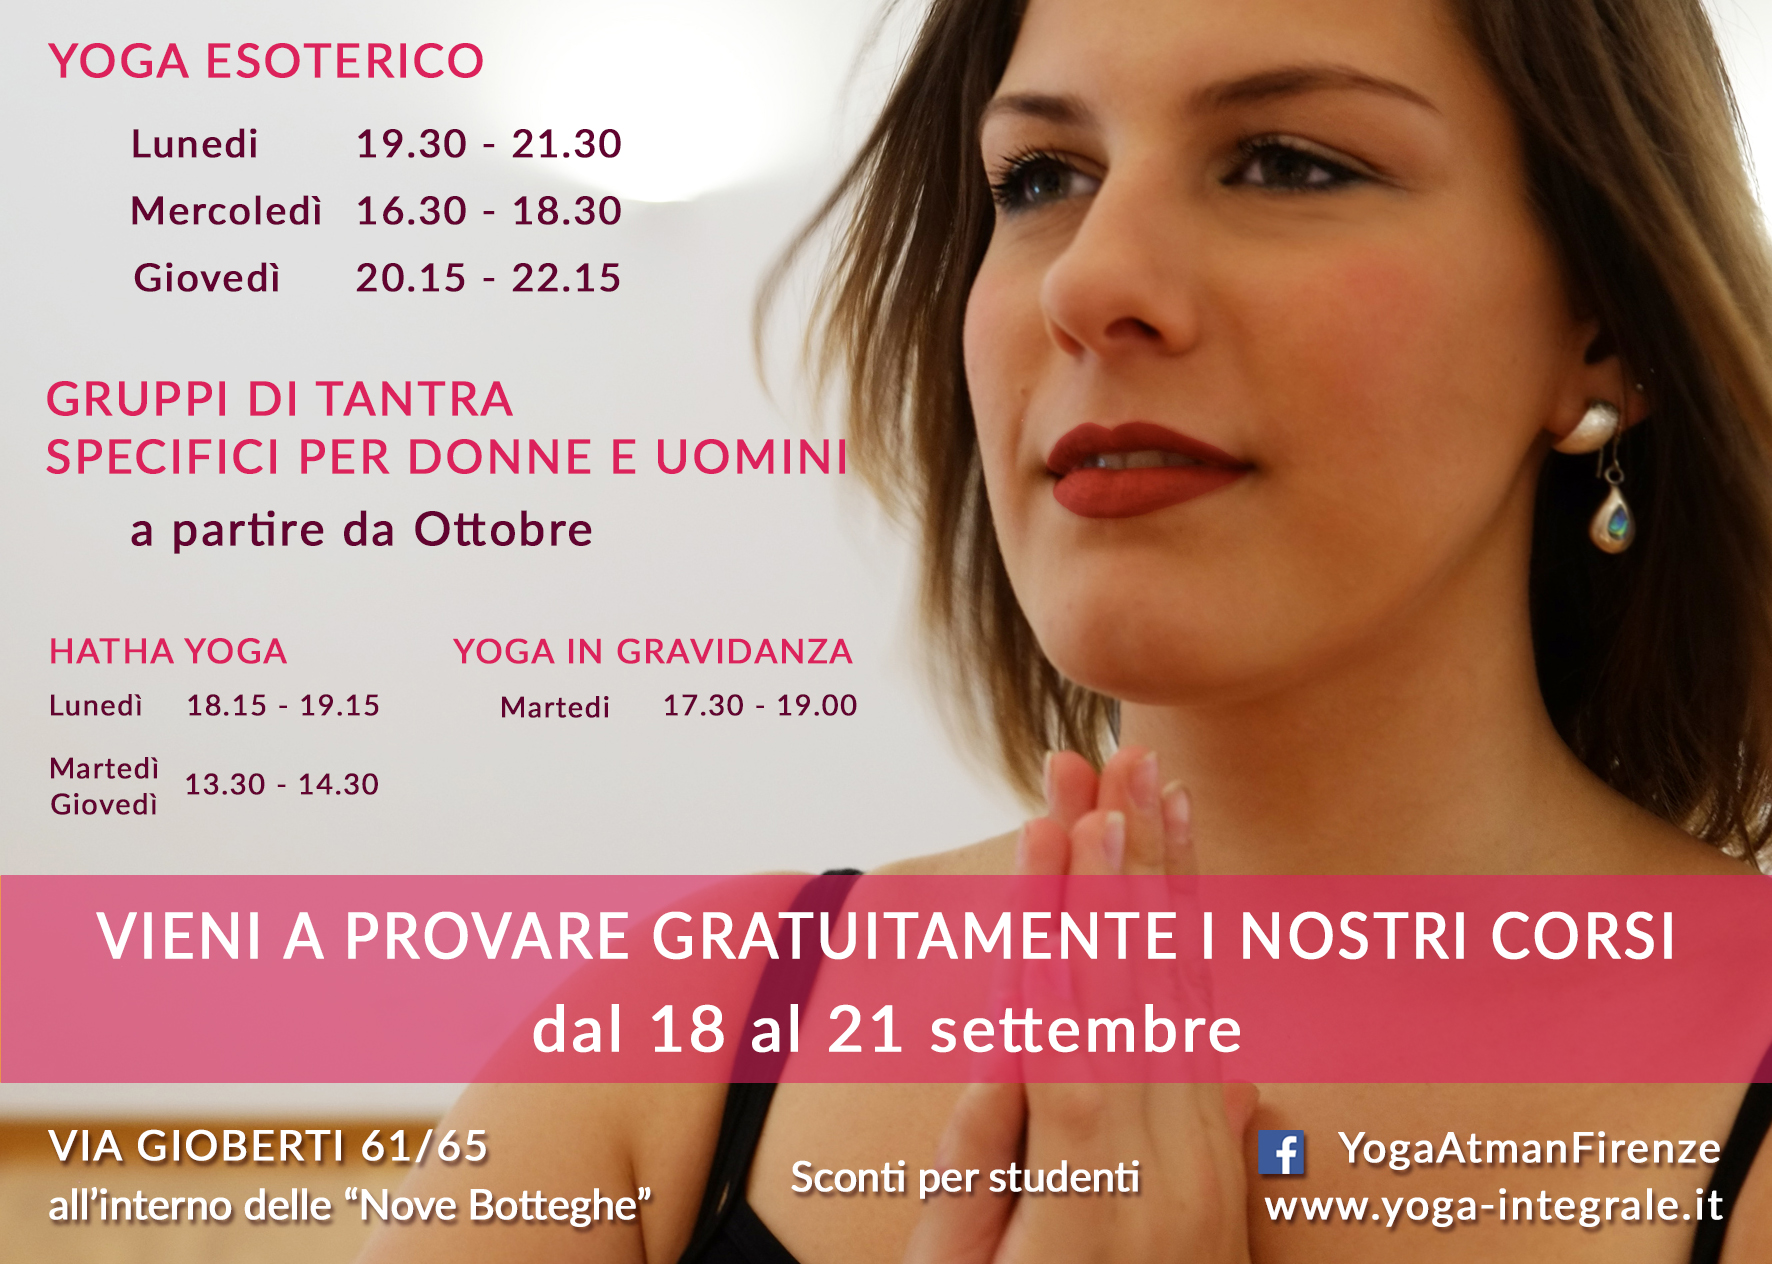 Settimana di Yoga ad ingresso libero a Firenze